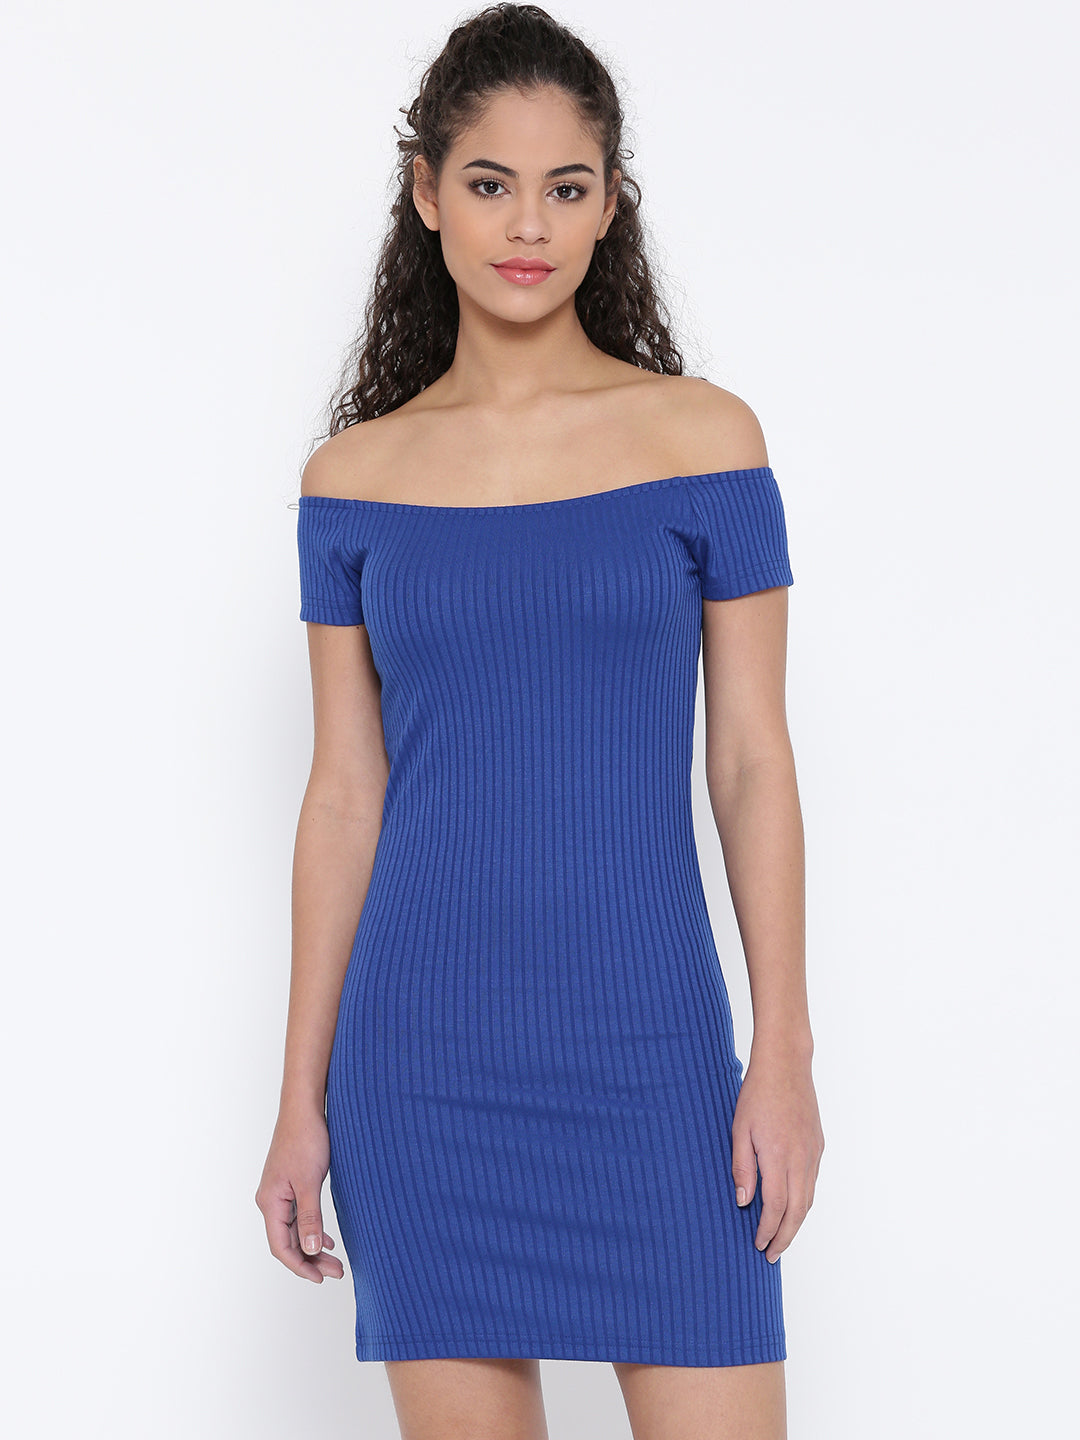 Women Blue Self-Striped Off-Shoulder Bodycon Dress